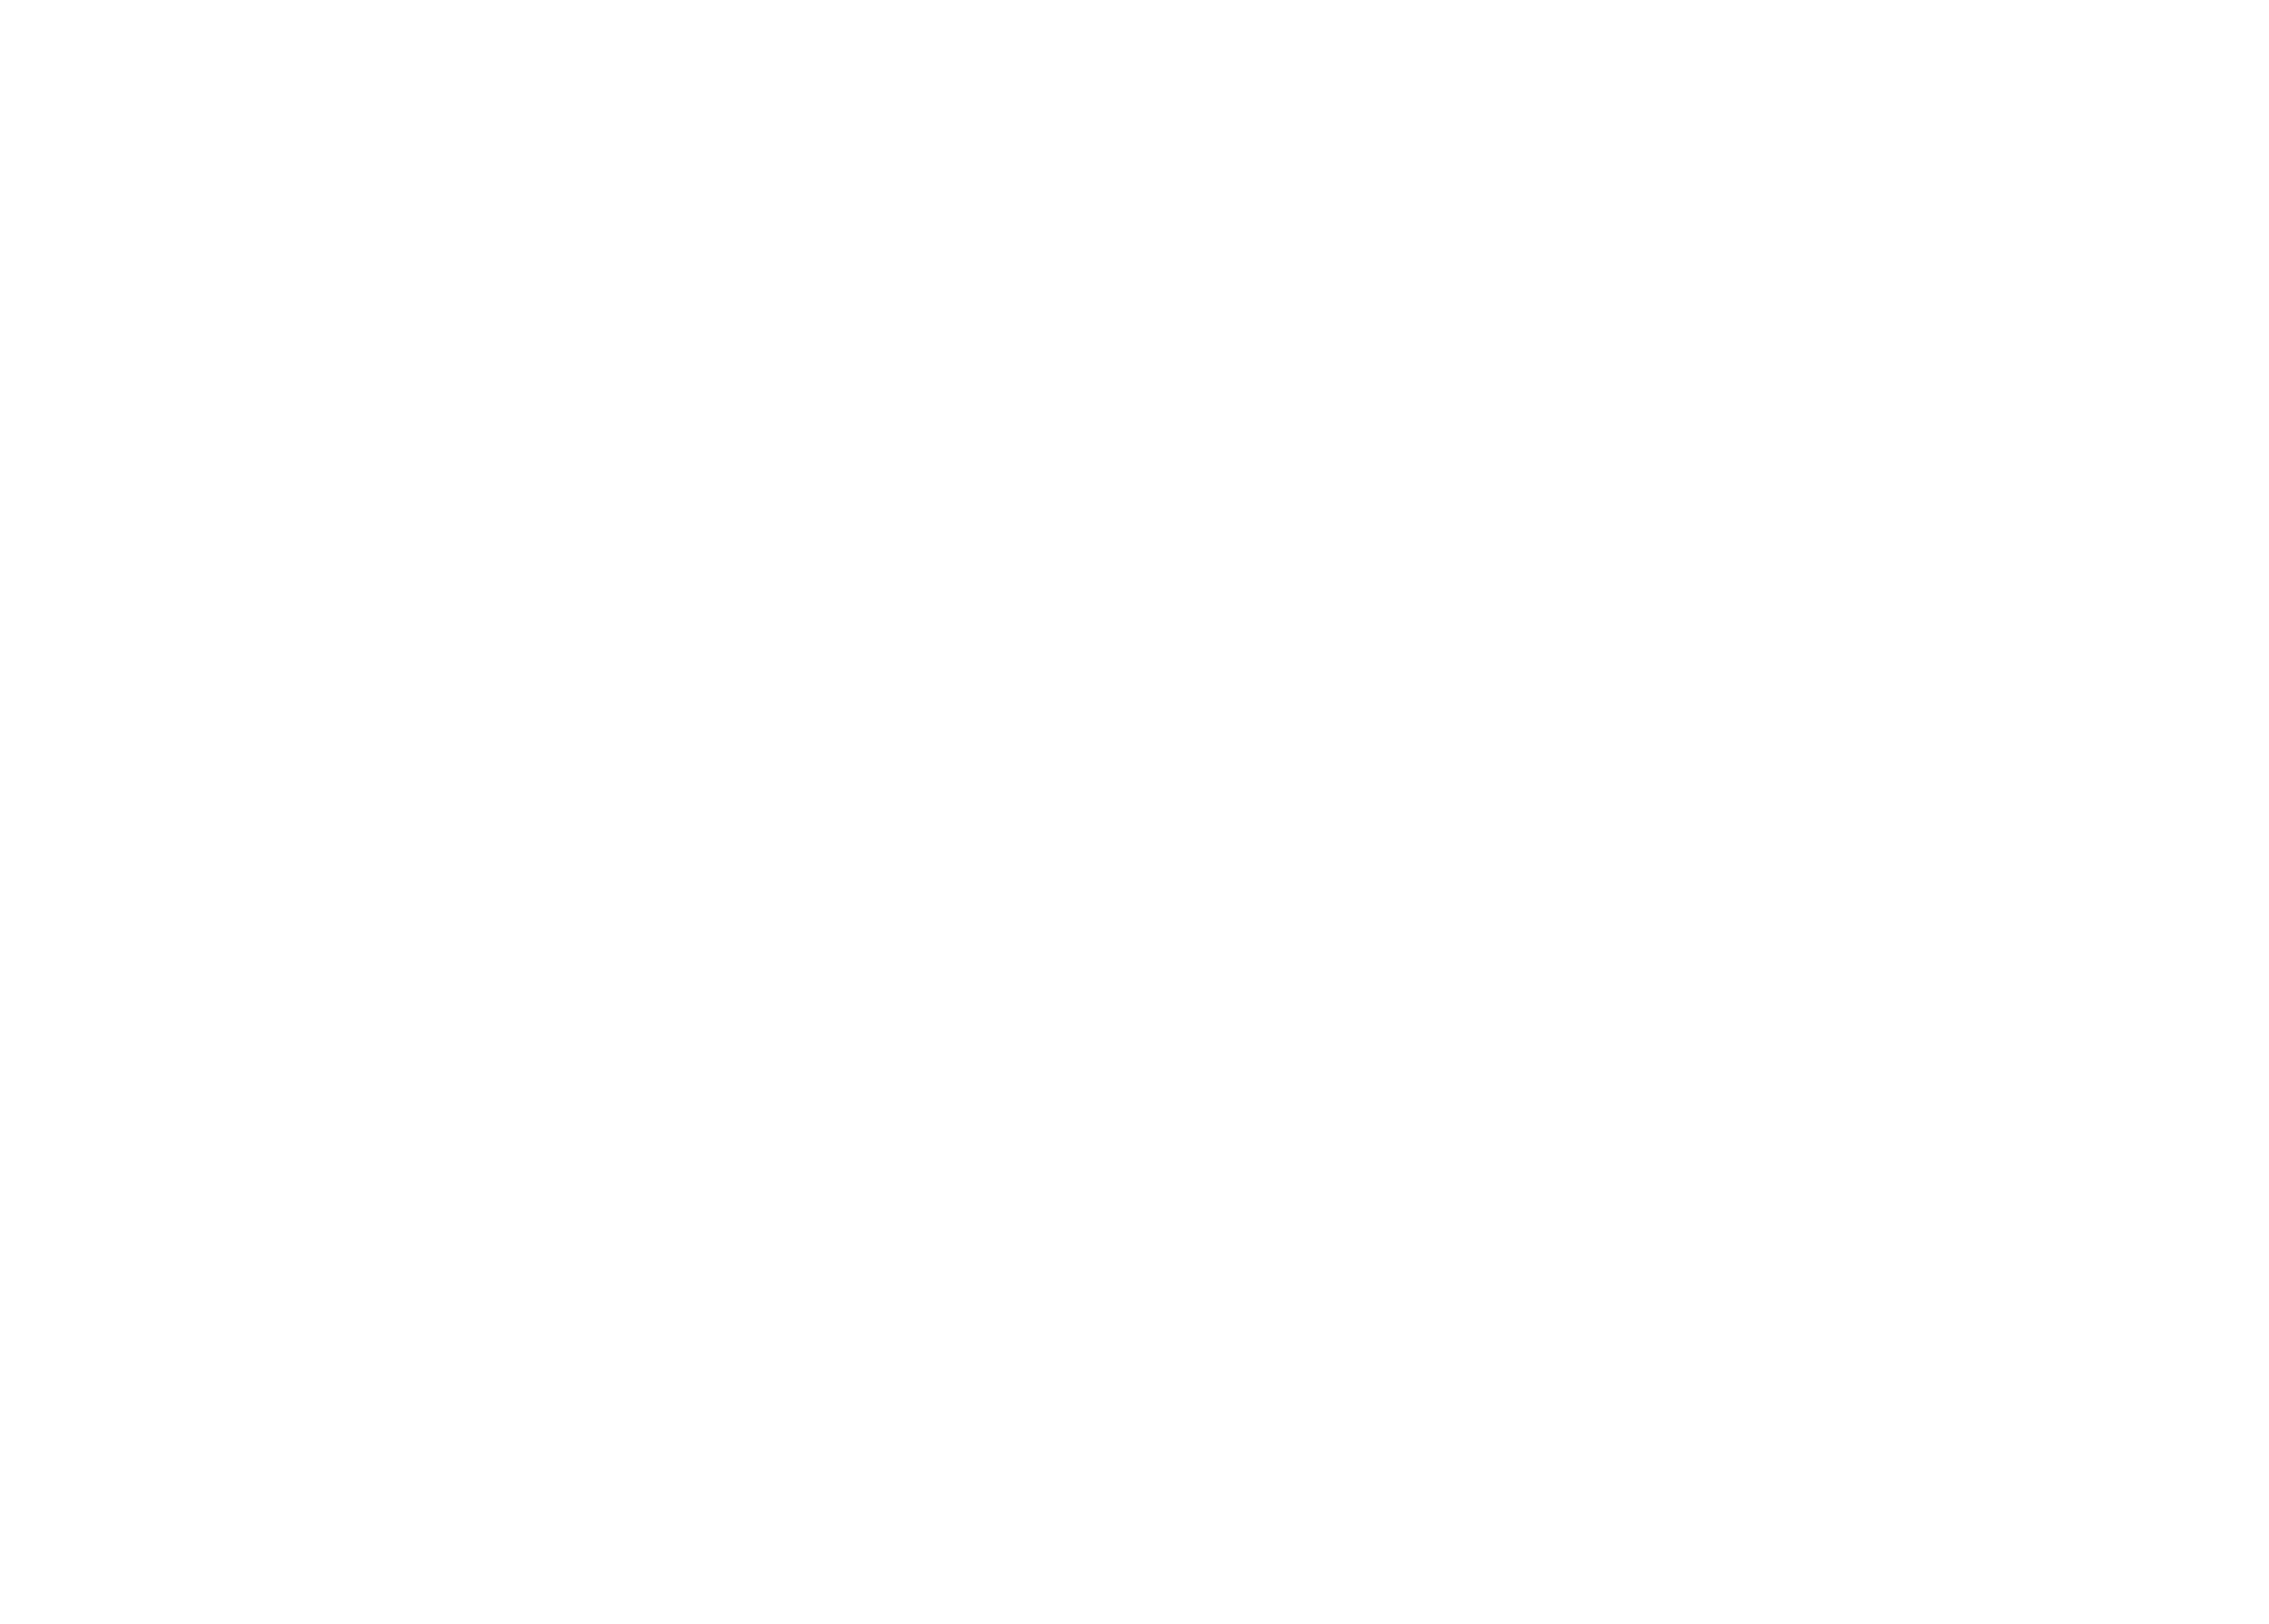 Cystic Fibrosis Ireland 2